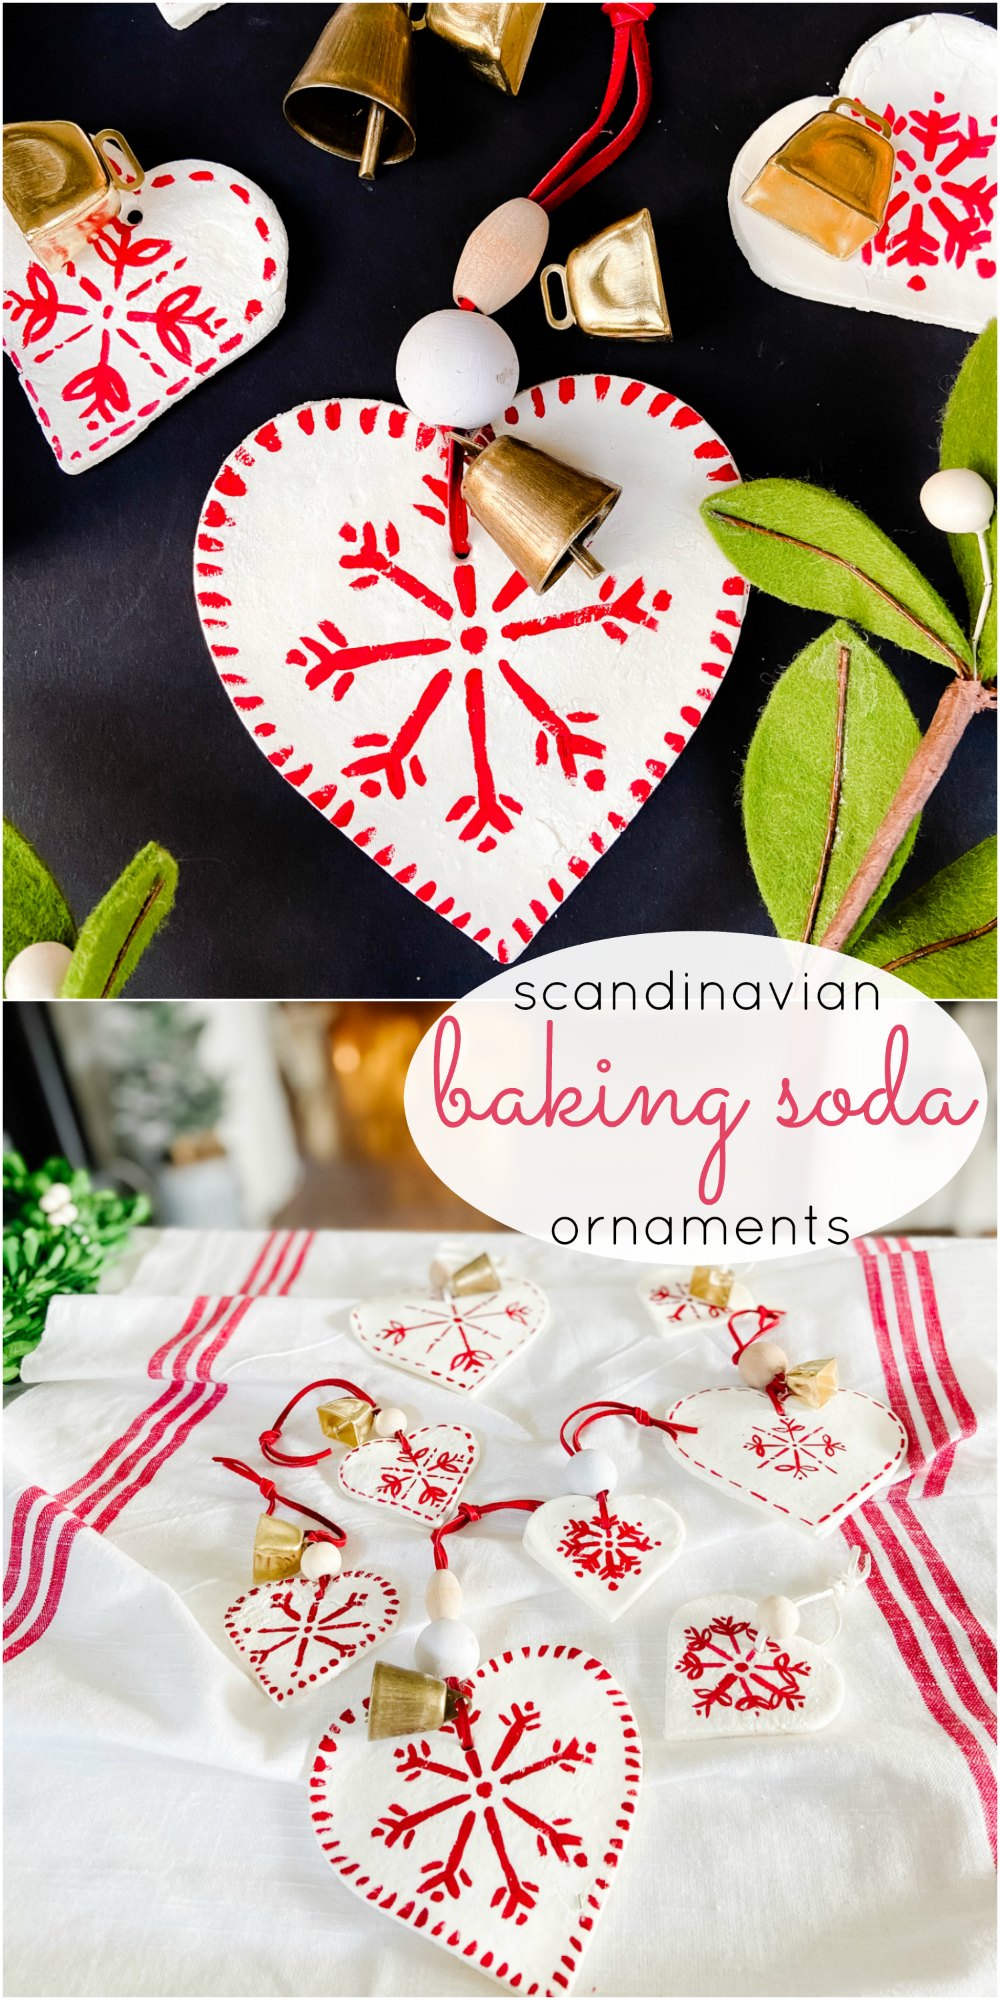 Baking SOda Scandinavian Ornaments